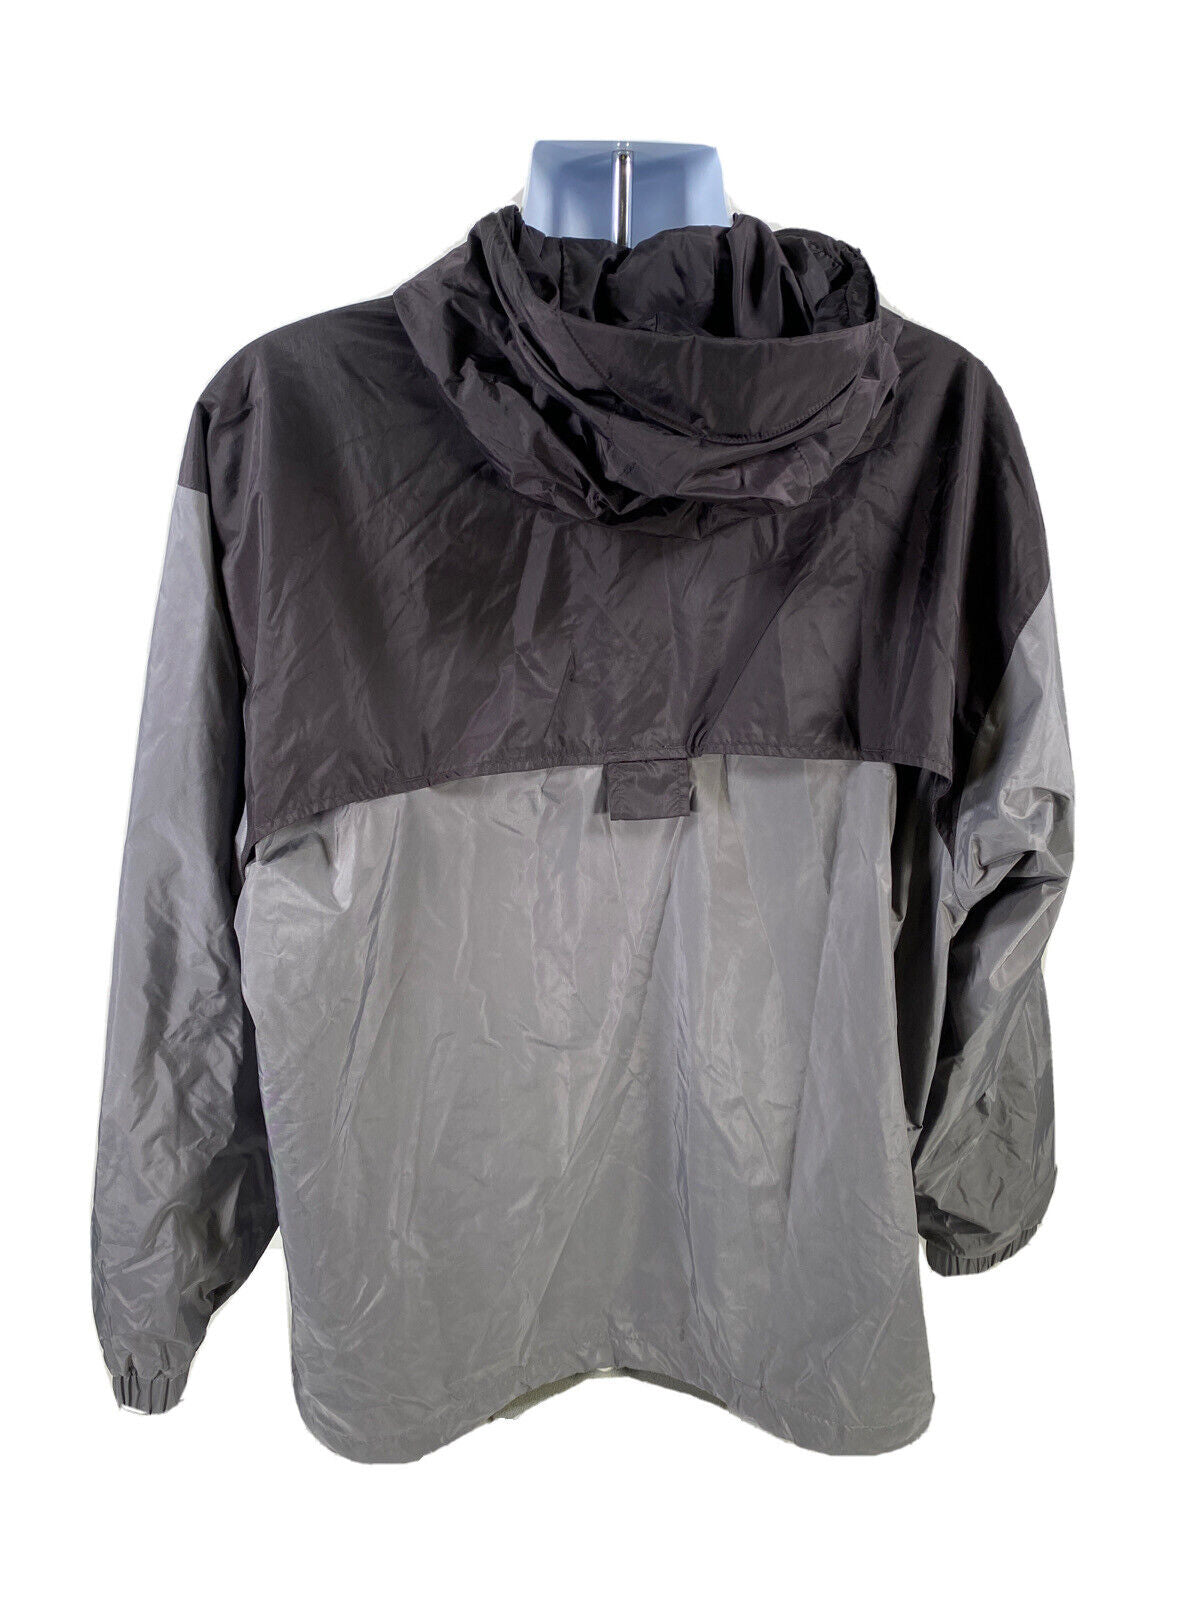 Cabela's Men's Gray Mesh Lined Full Zip Hooded Windbreaker Jacket - L